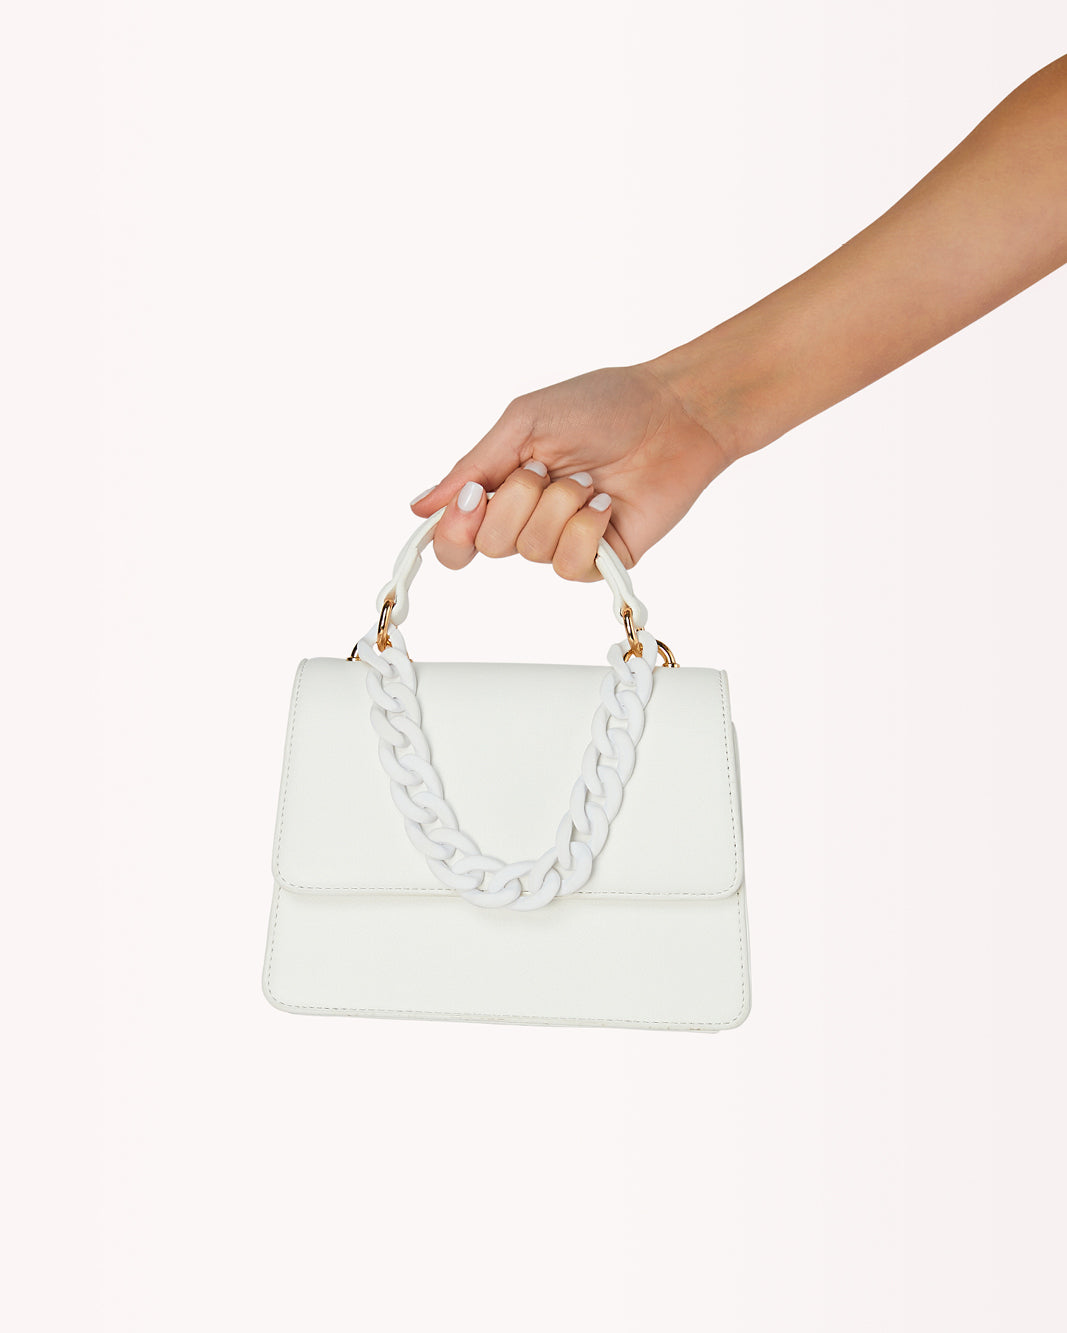 ARRIE CROSS BODY BAG - WHITE-Handbags-Billini--BILLINI USA